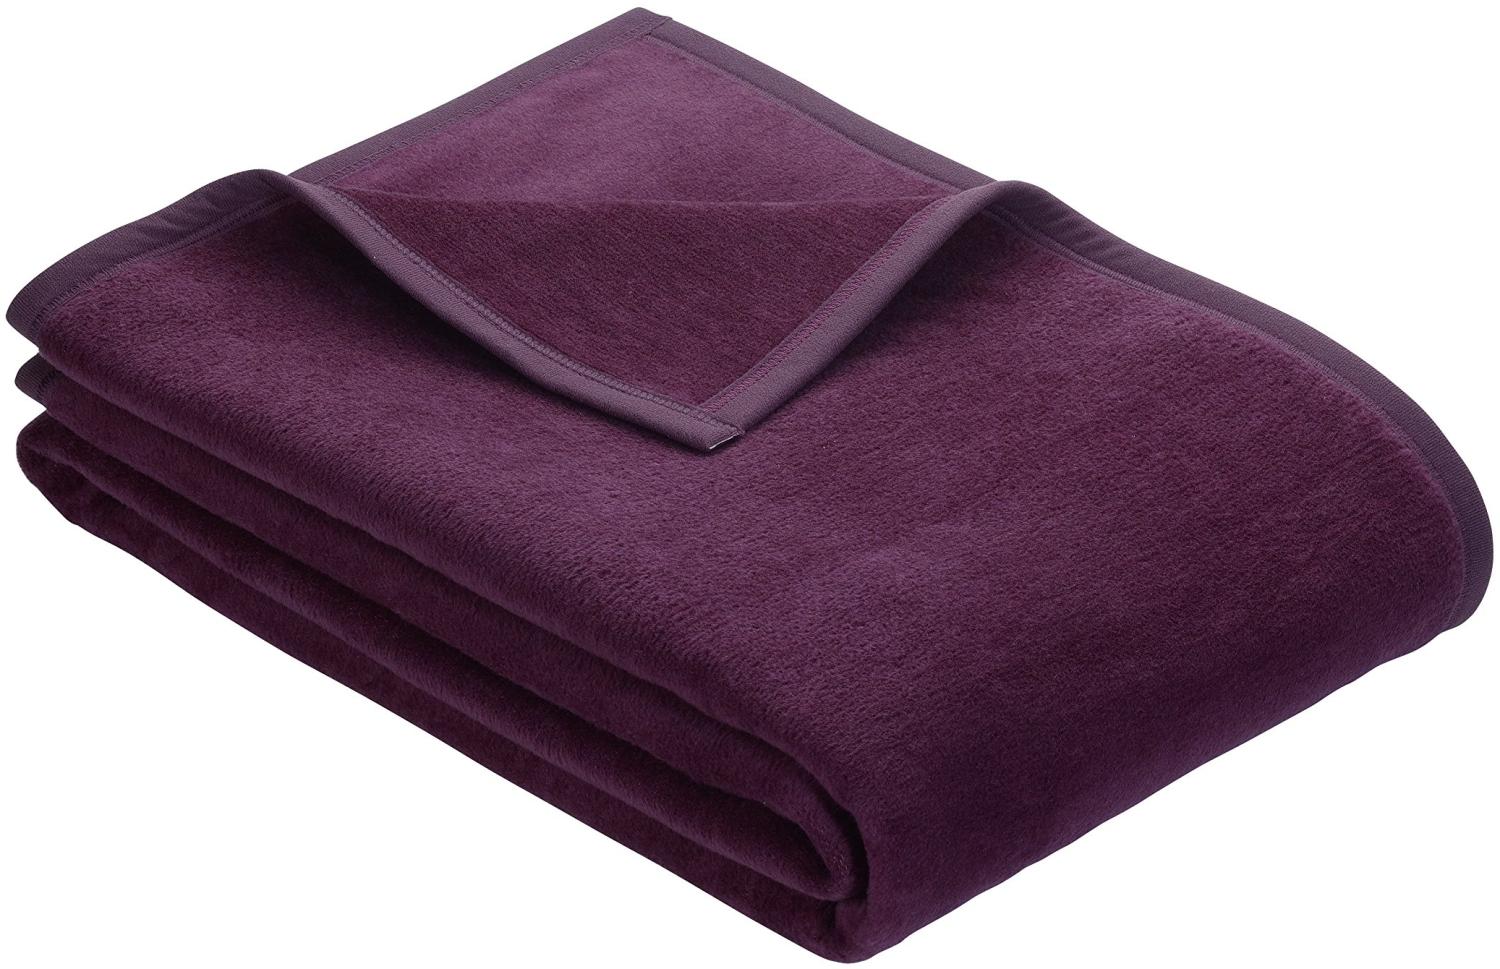 Ibena Porto XXL Decke 180x220 cm – Baumwollmischung weich, warm & waschbar, Tagesdecke lila einfarbig Bild 1